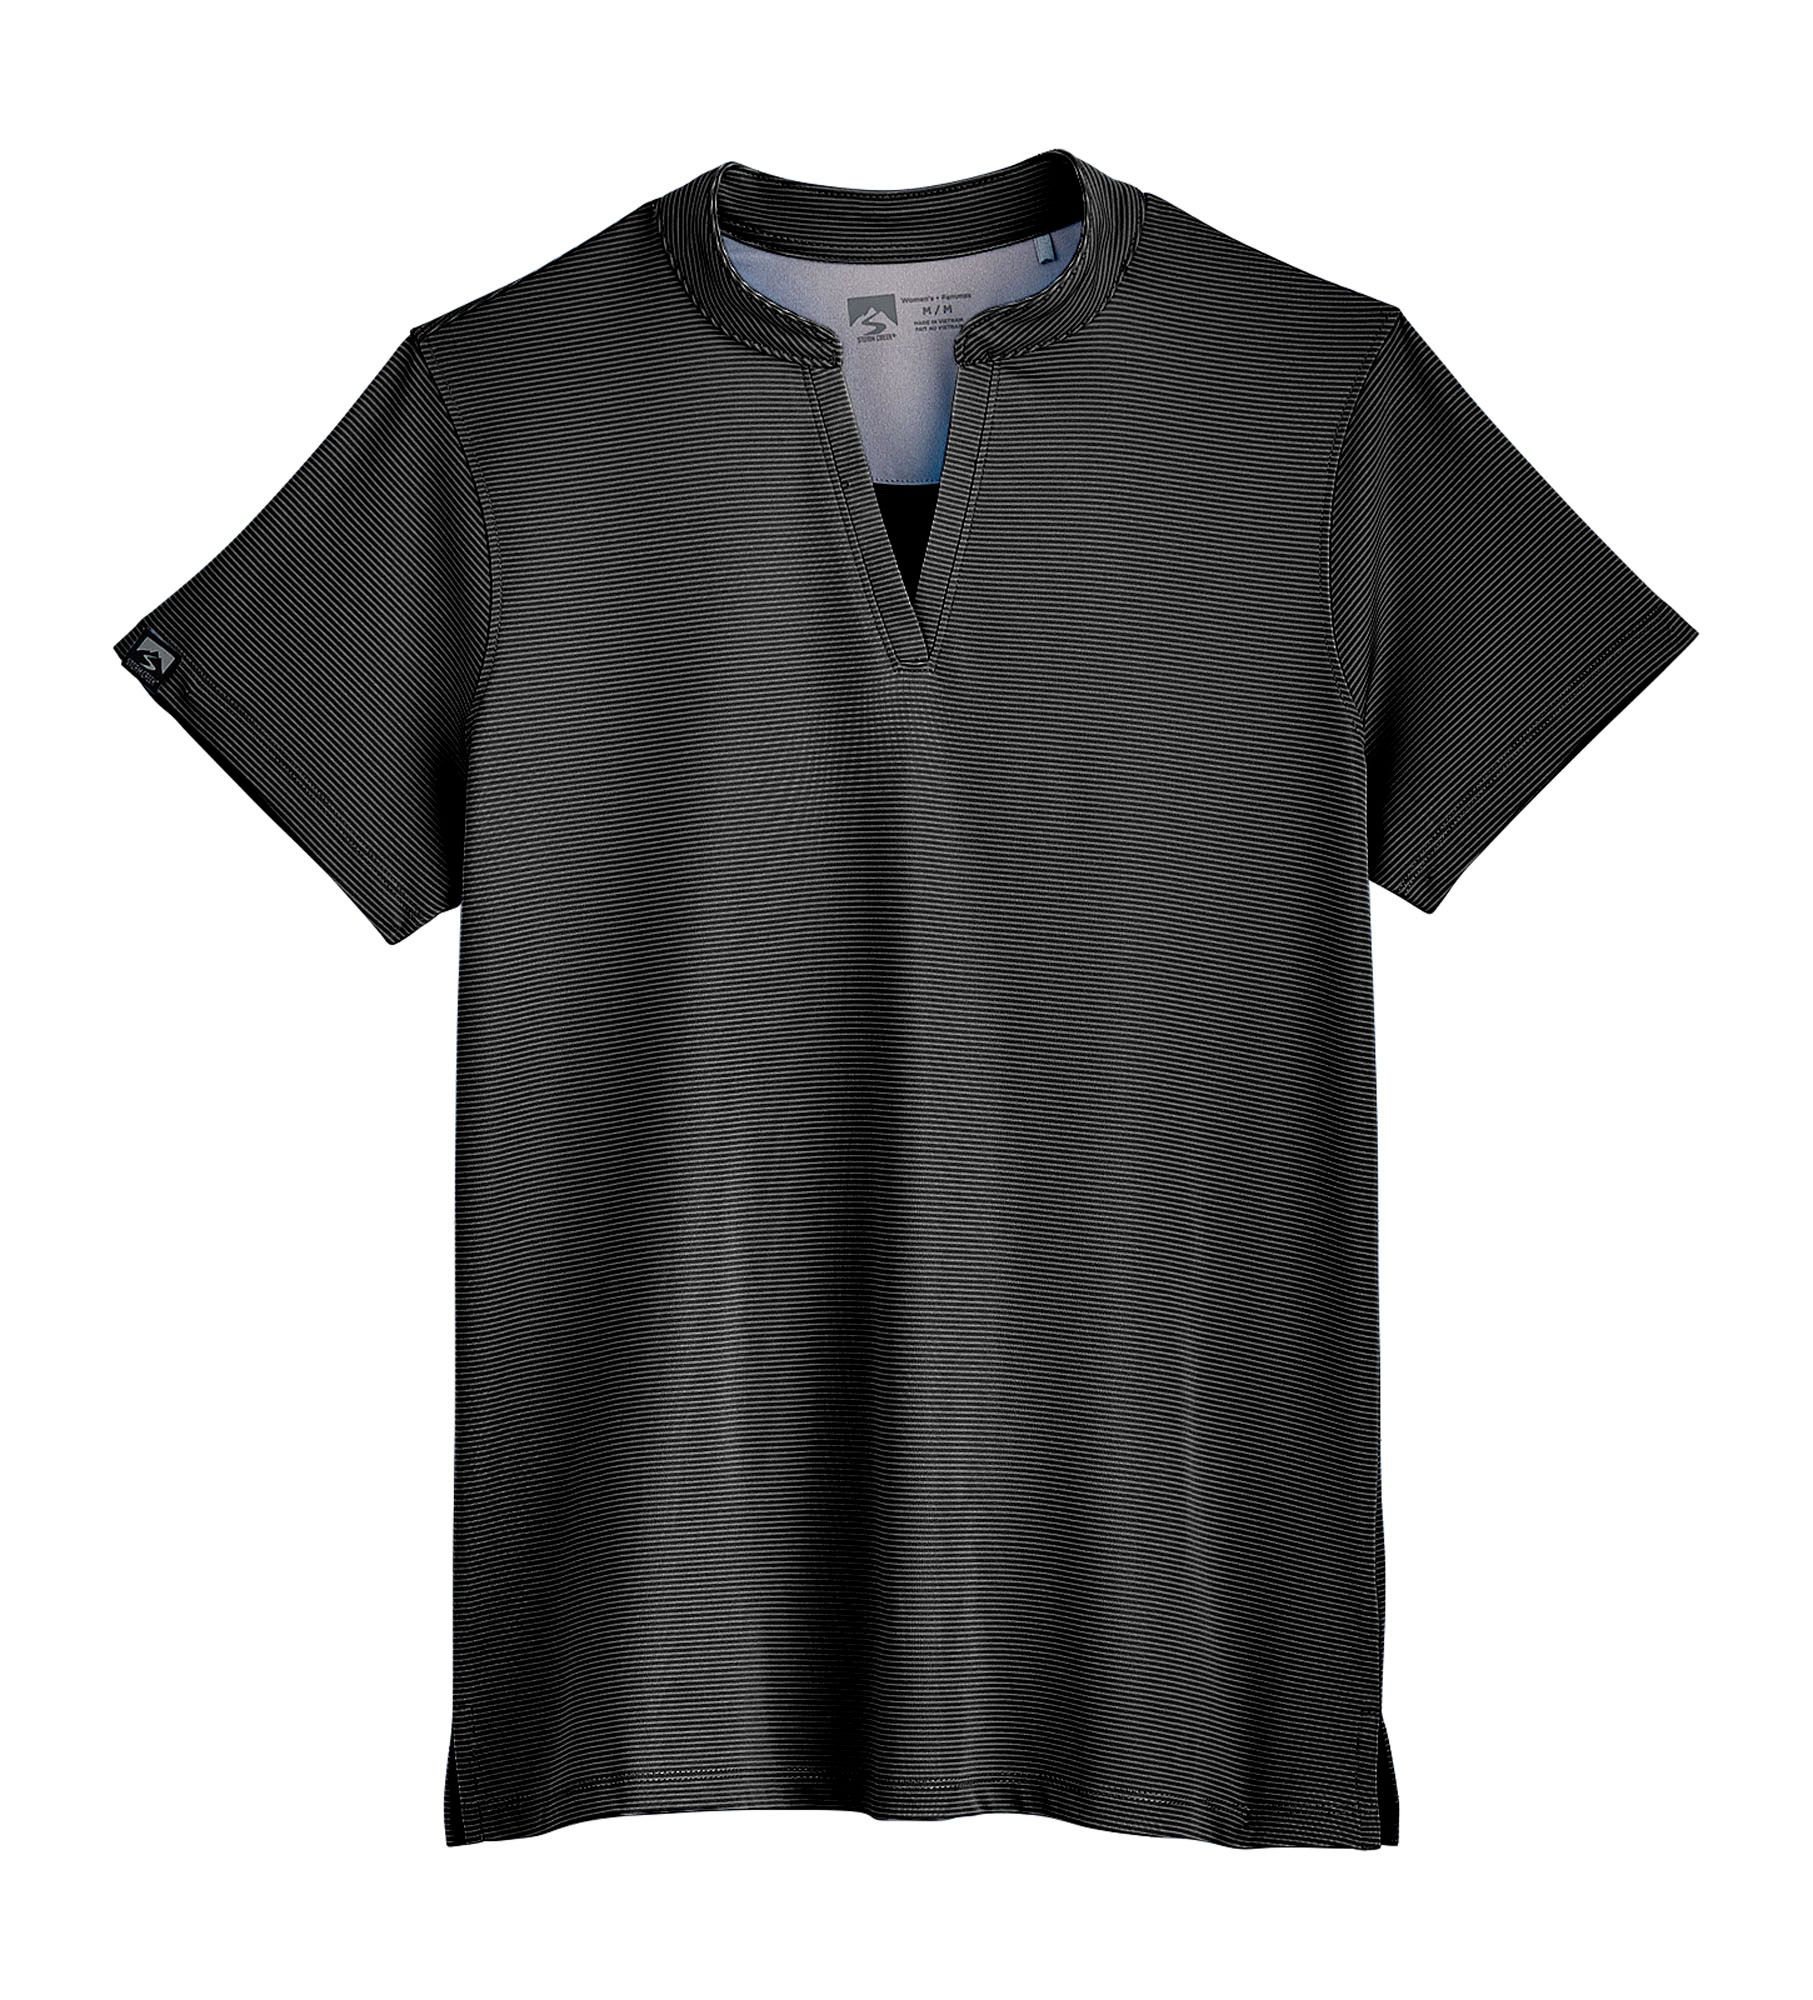 Storm Creek Optimist Short-Sleeve Polo Shirt for Ladies - Black - 2XL